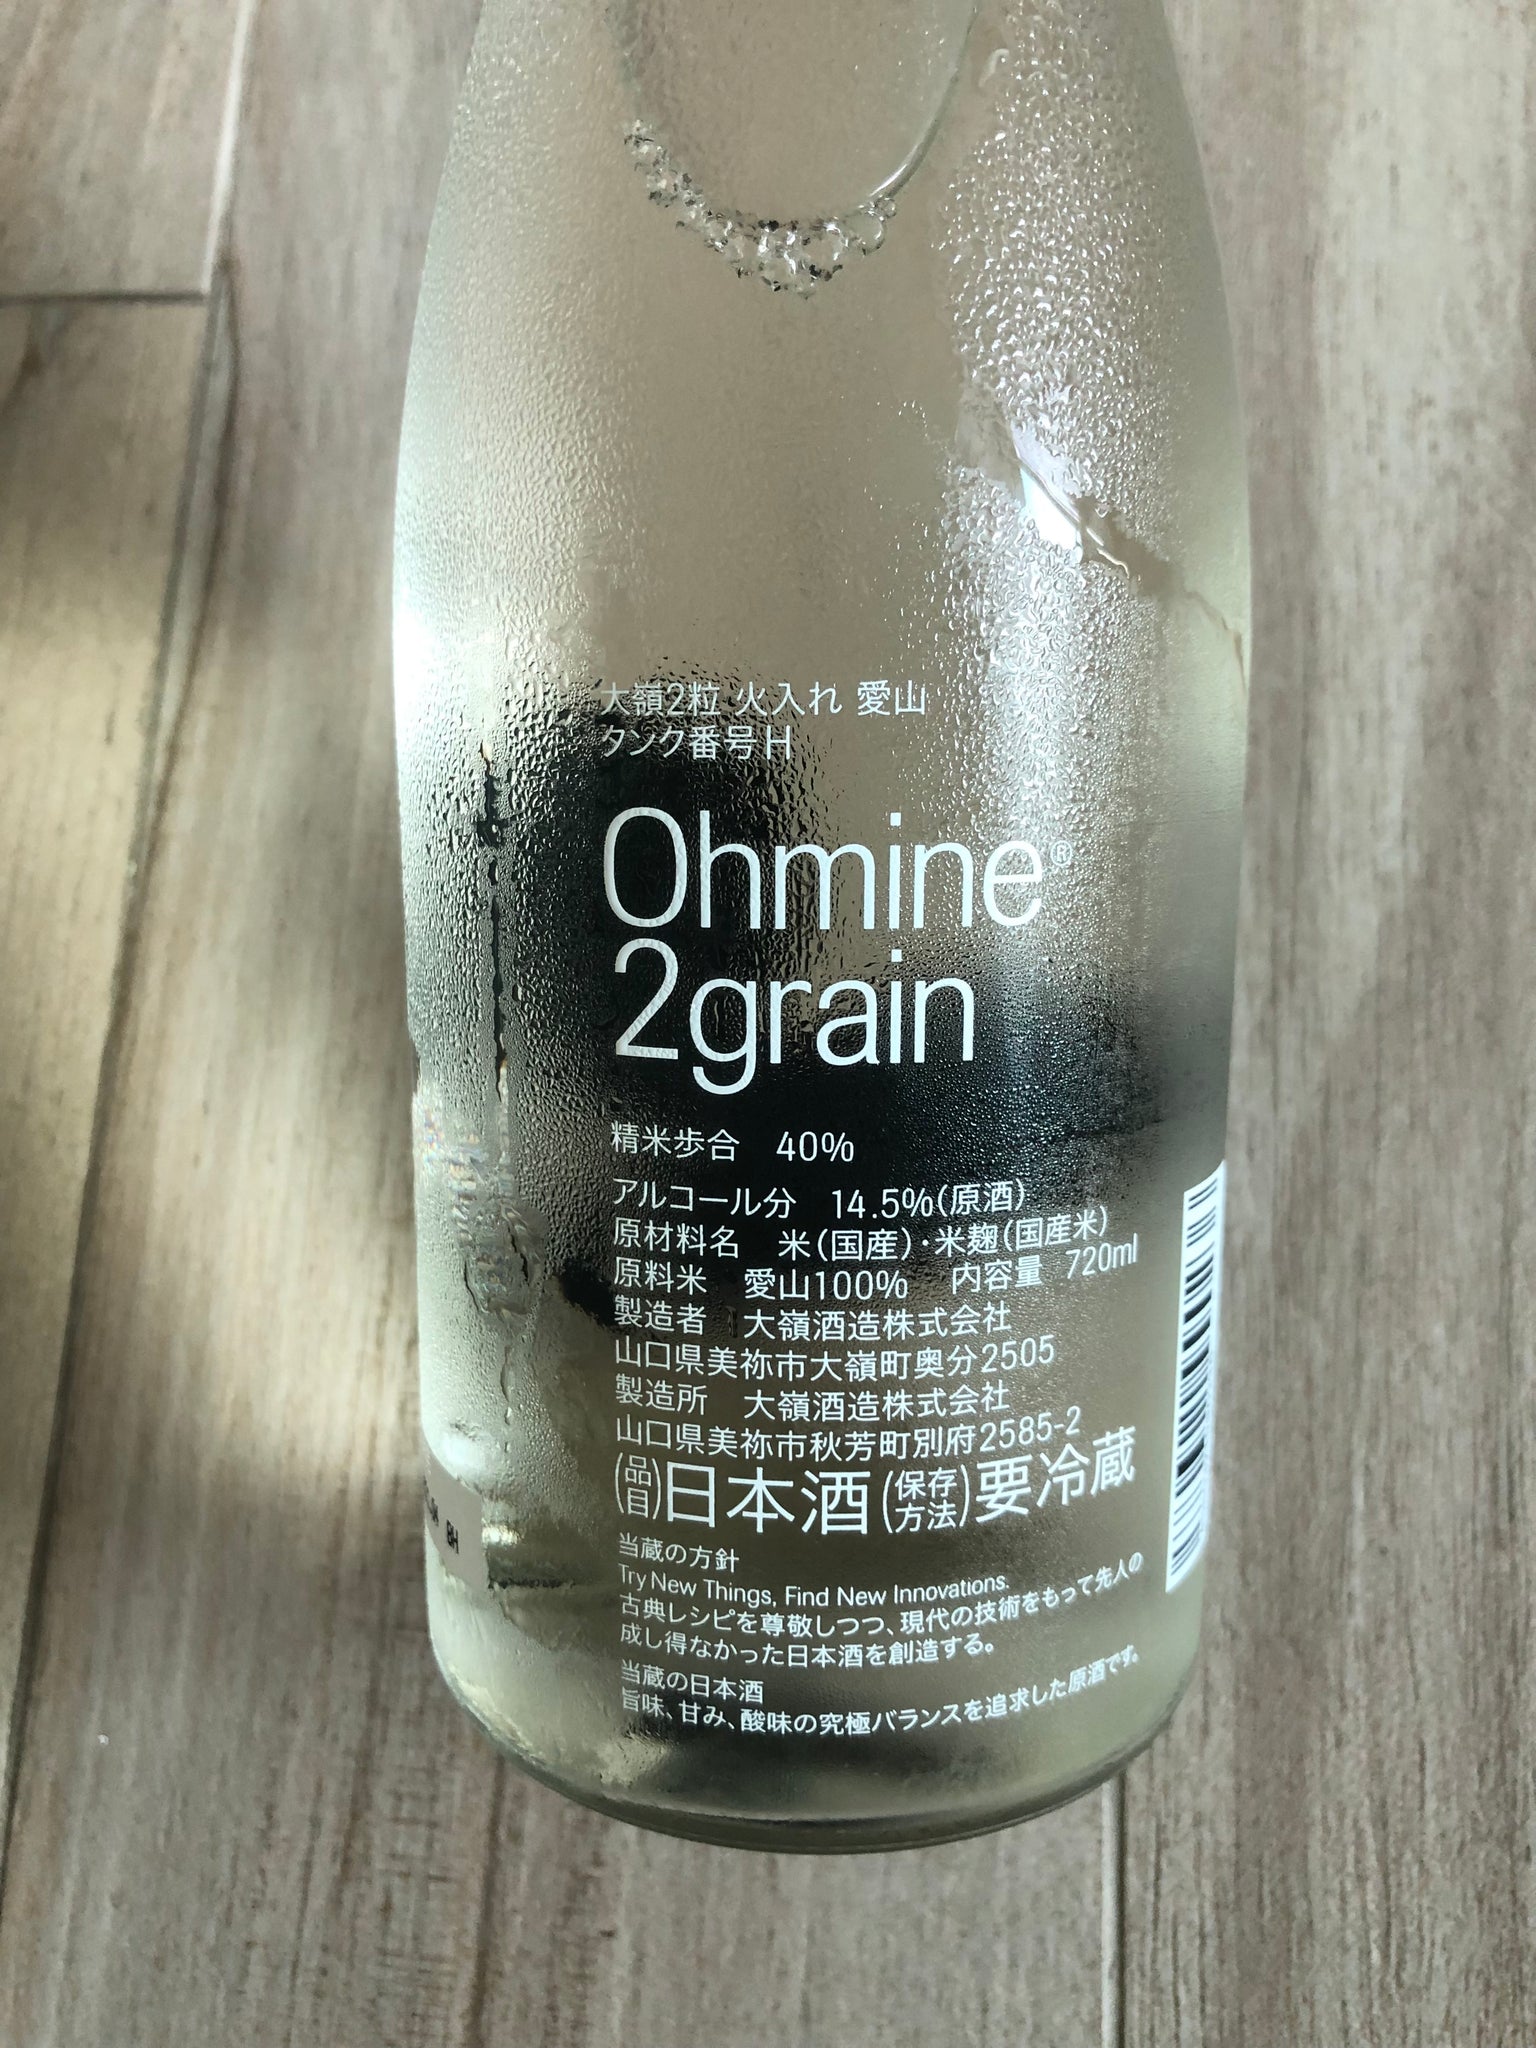 【兩粒米 】Ohmine 大嶺酒造 2 grain 火入れ原酒 愛山 日本清酒 720ml